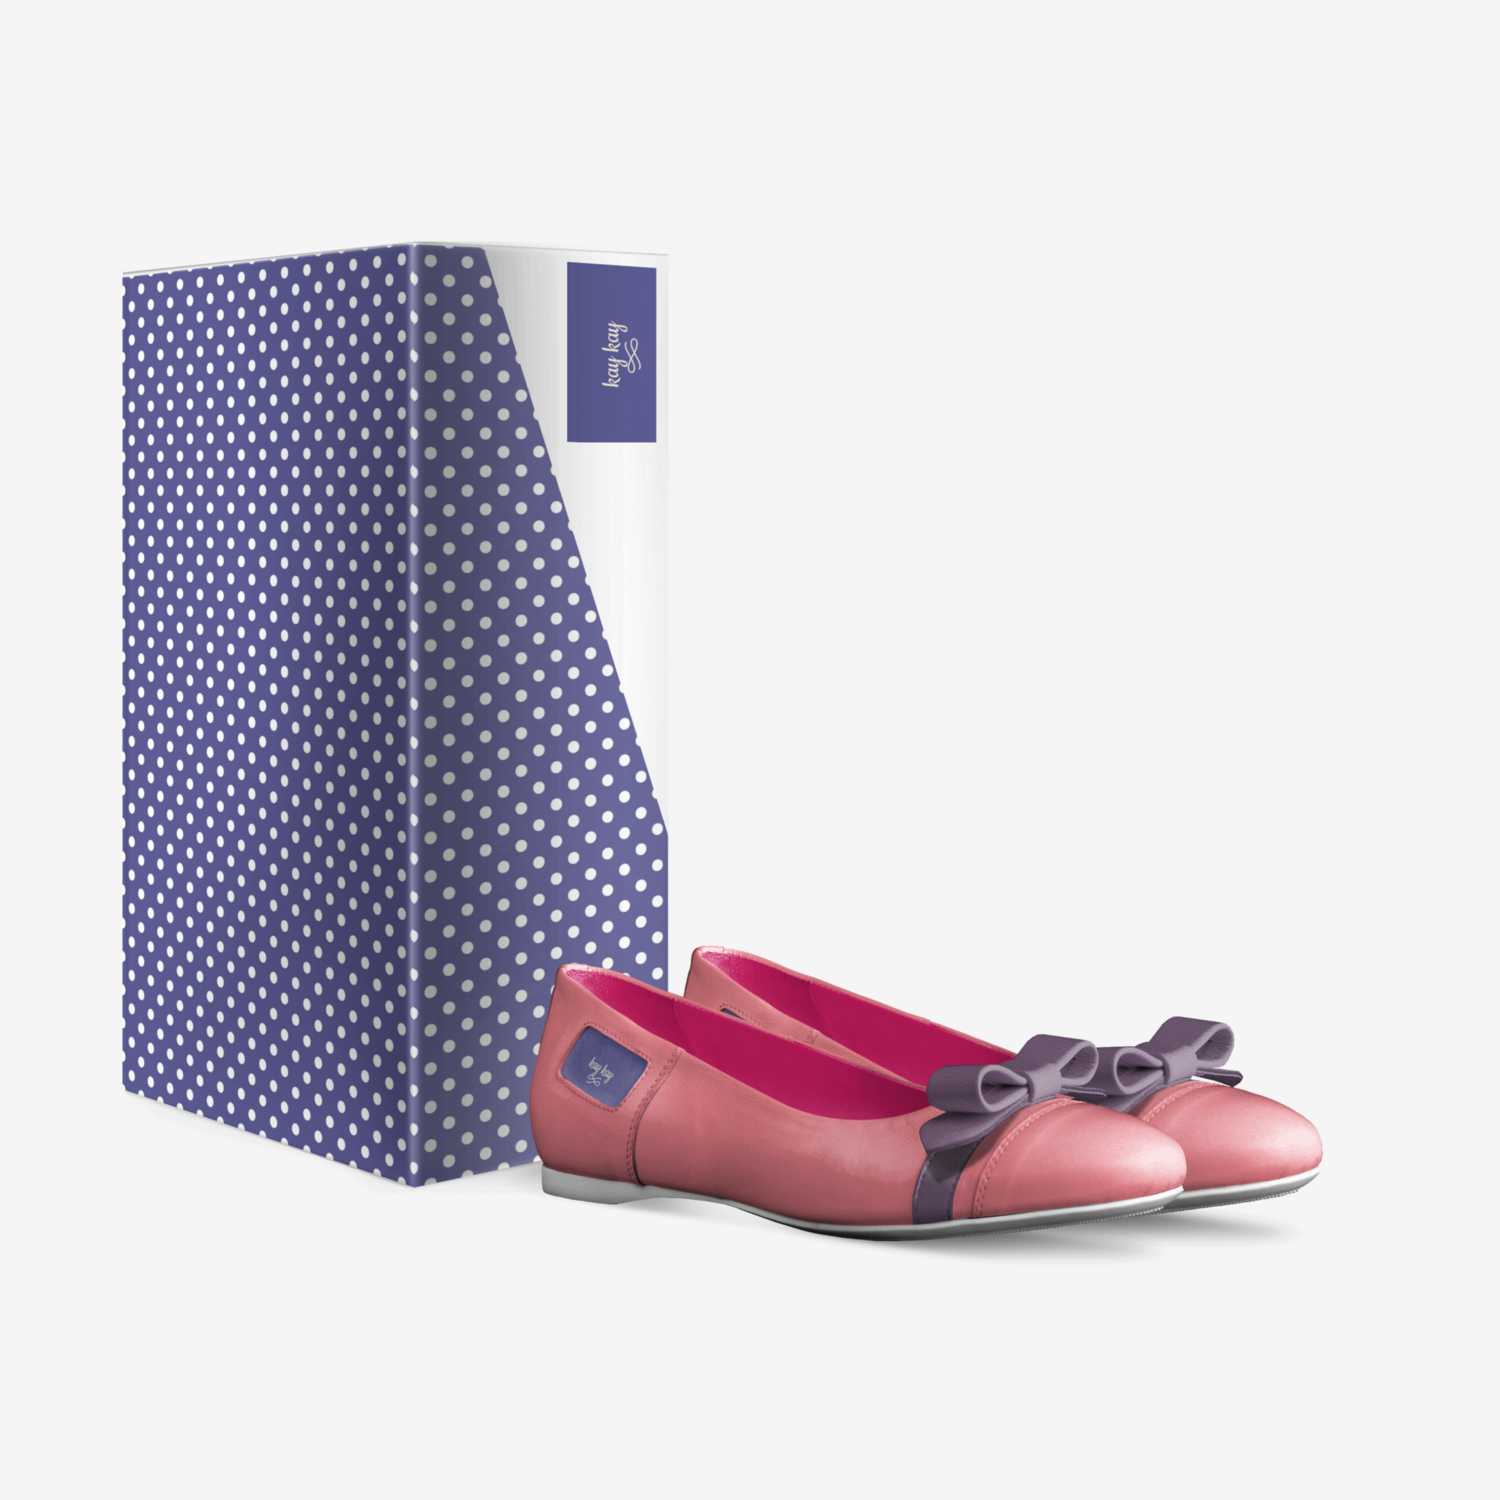 kay kay custom made in Italy shoes by Khamora Brown | Box view